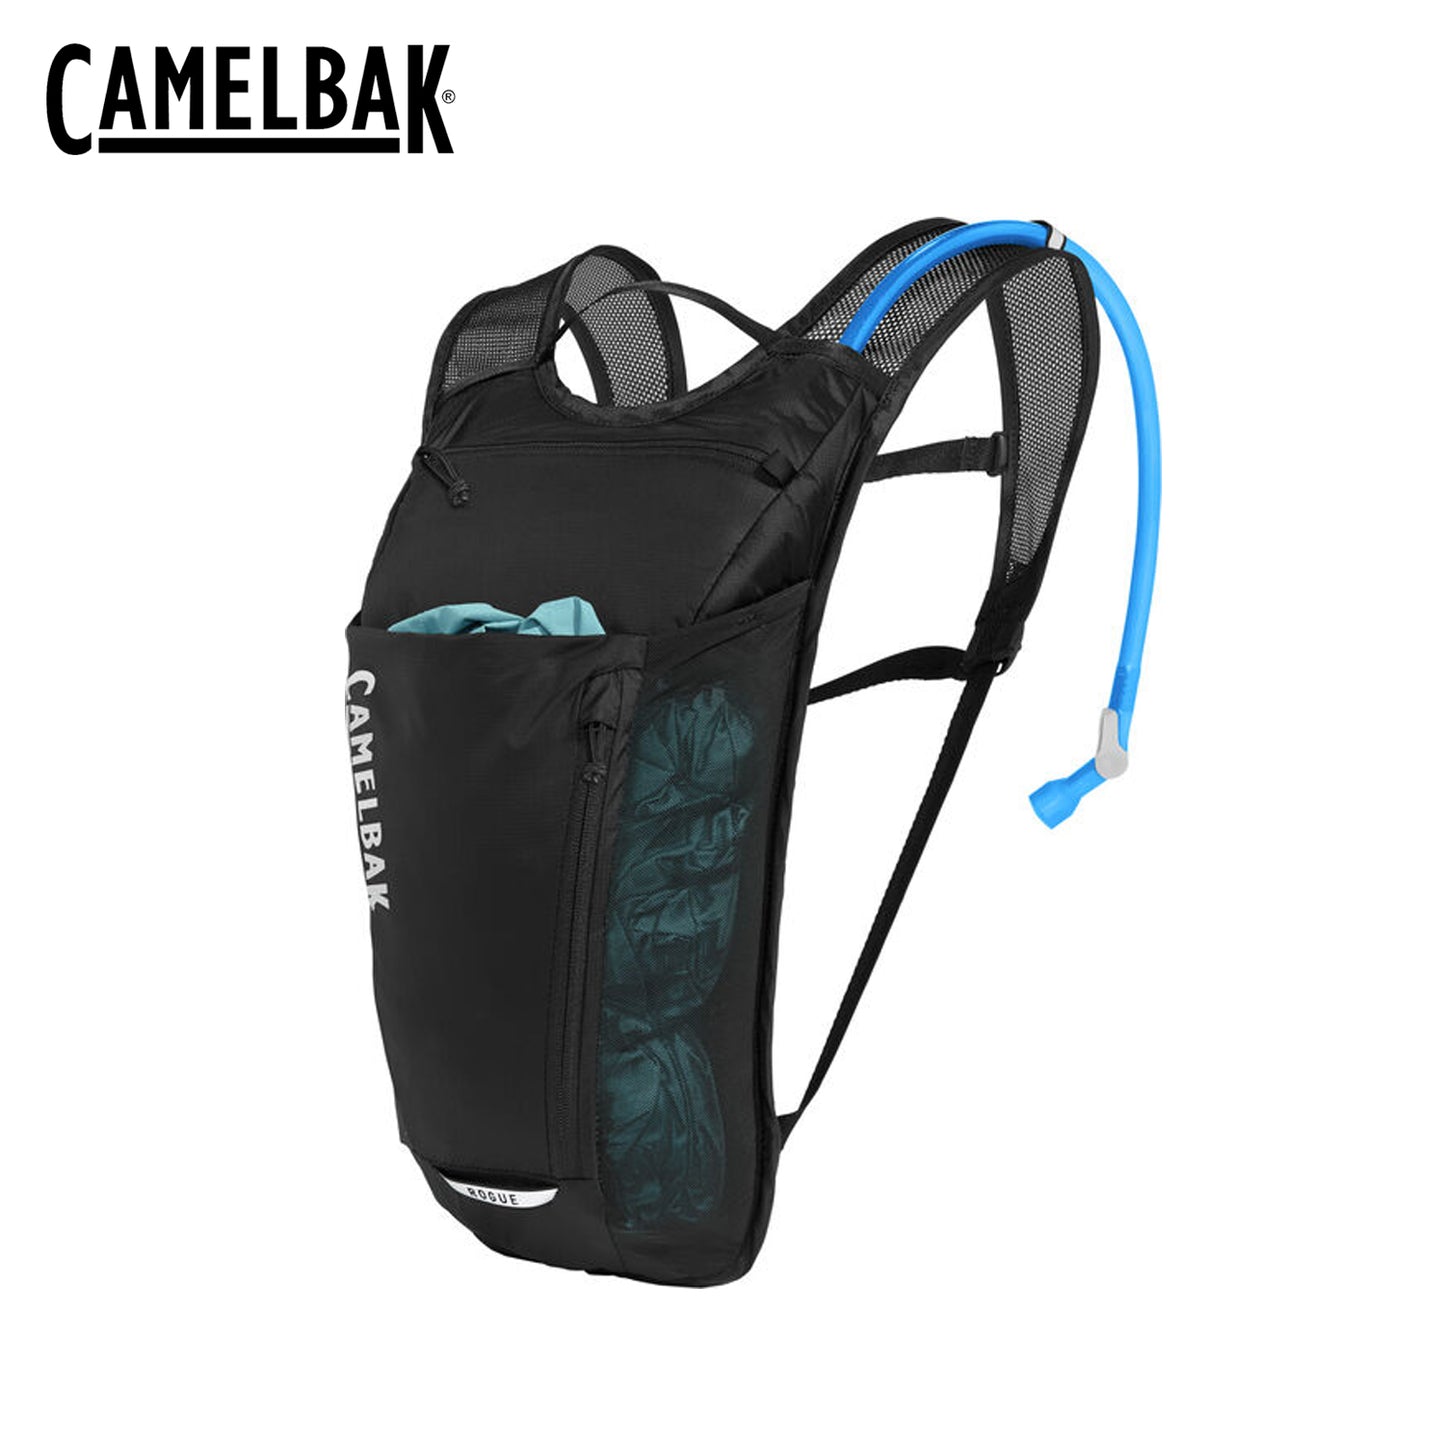 CamelBak Rogue Light 70oz Hydration Pack - Black/Silver